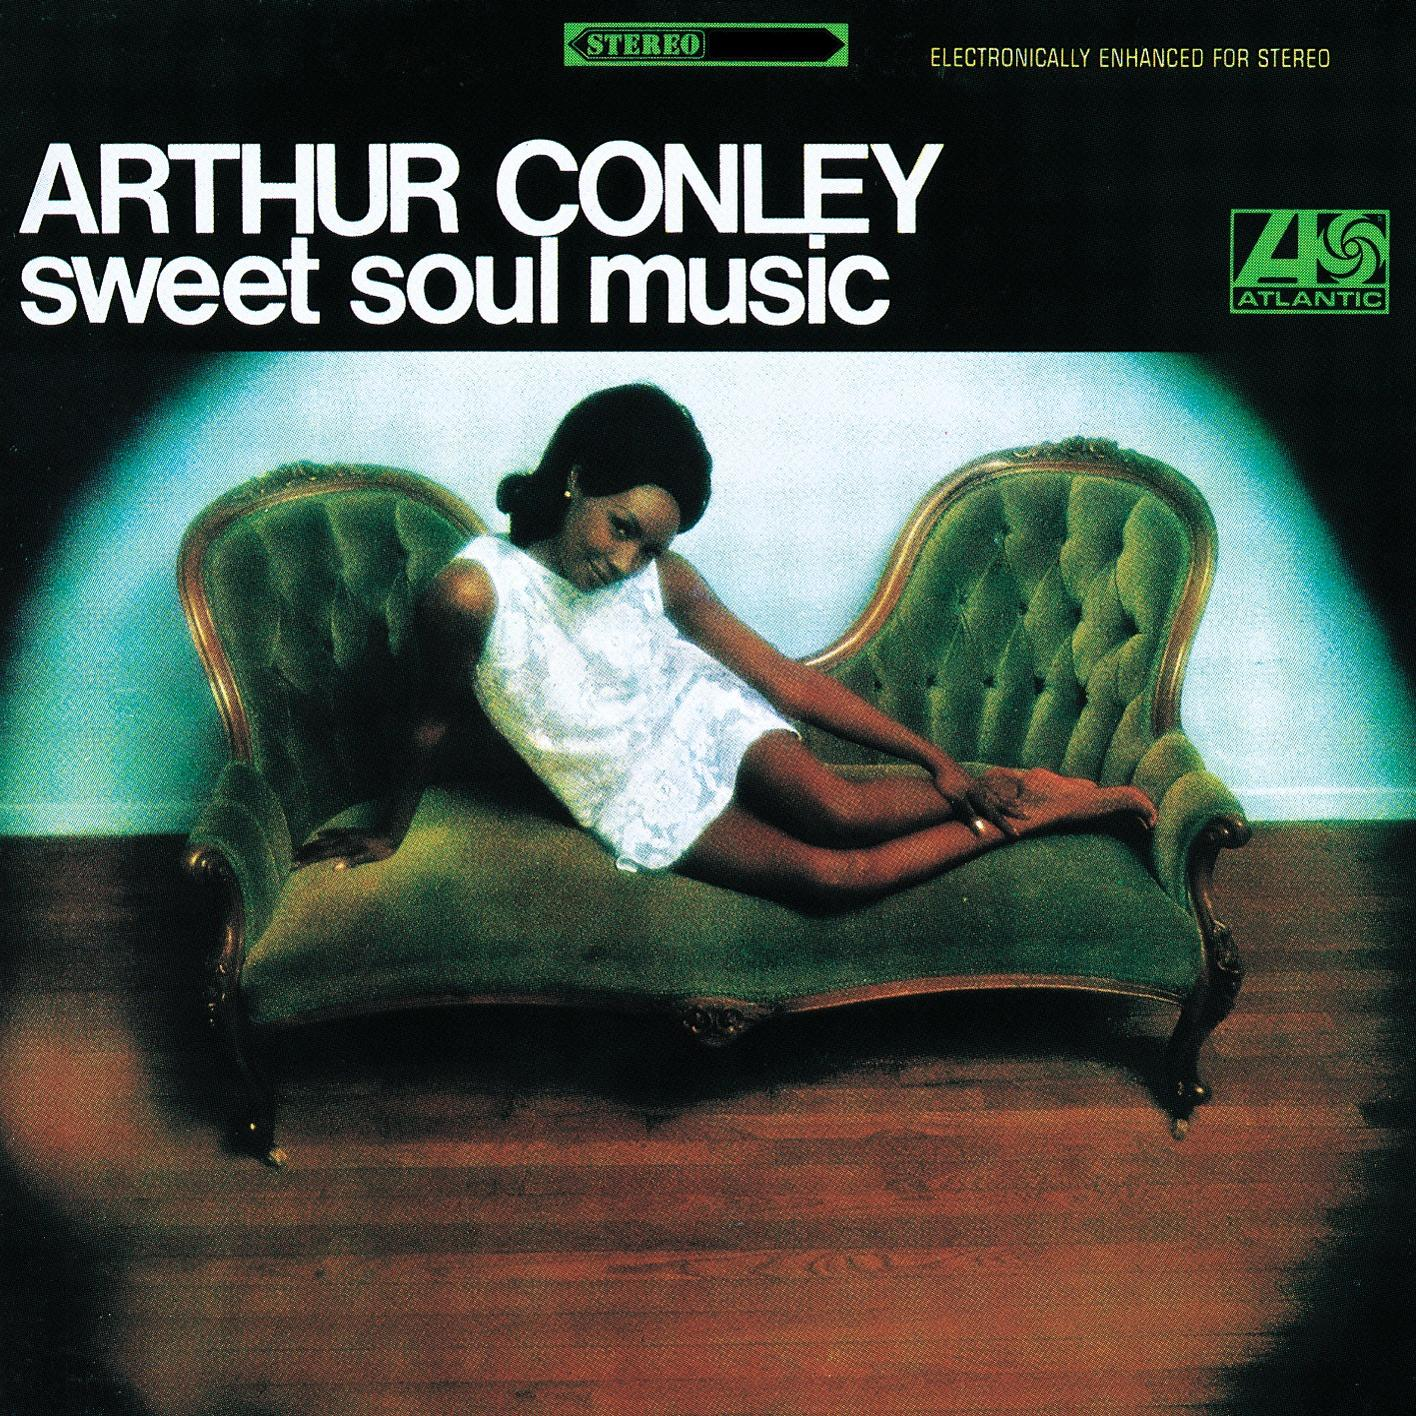 Arthur Conley - Sweet (Vinyl) Music Soul - (Mono)